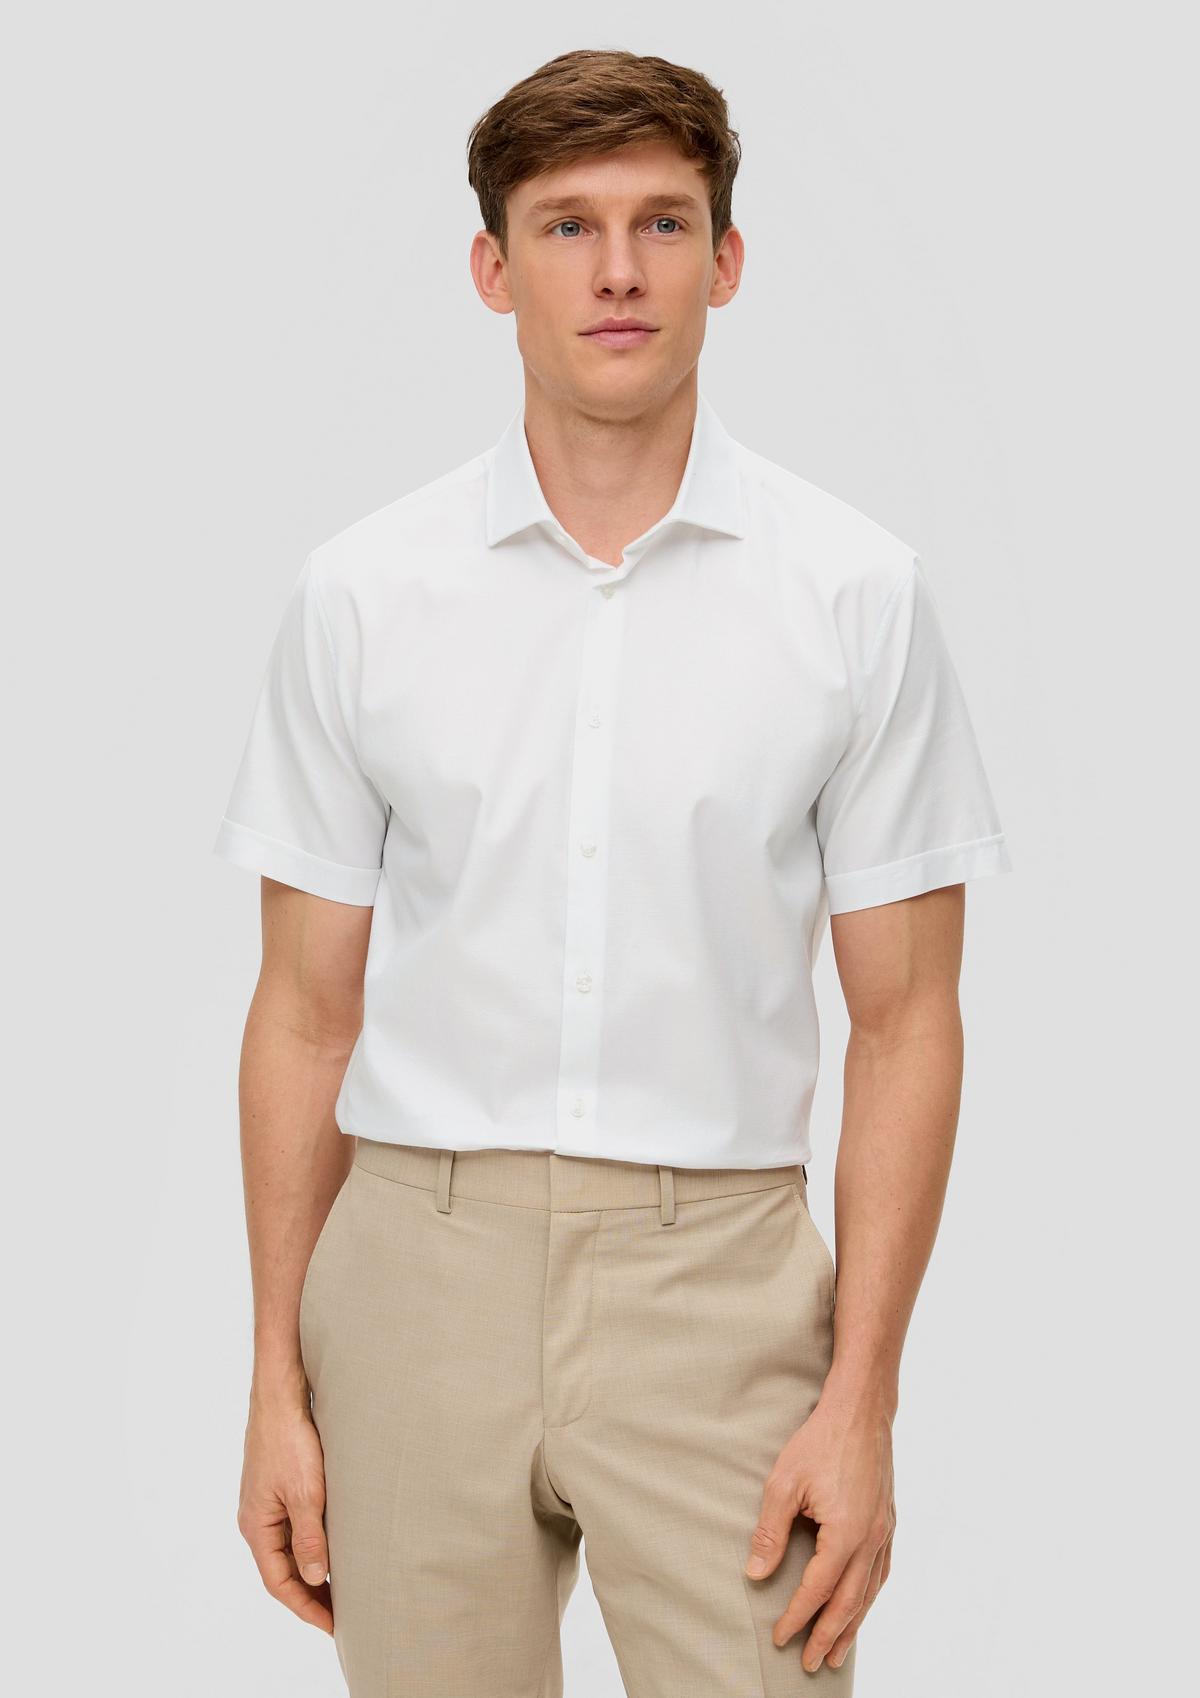 Short sleeve shirt with a dobby texture